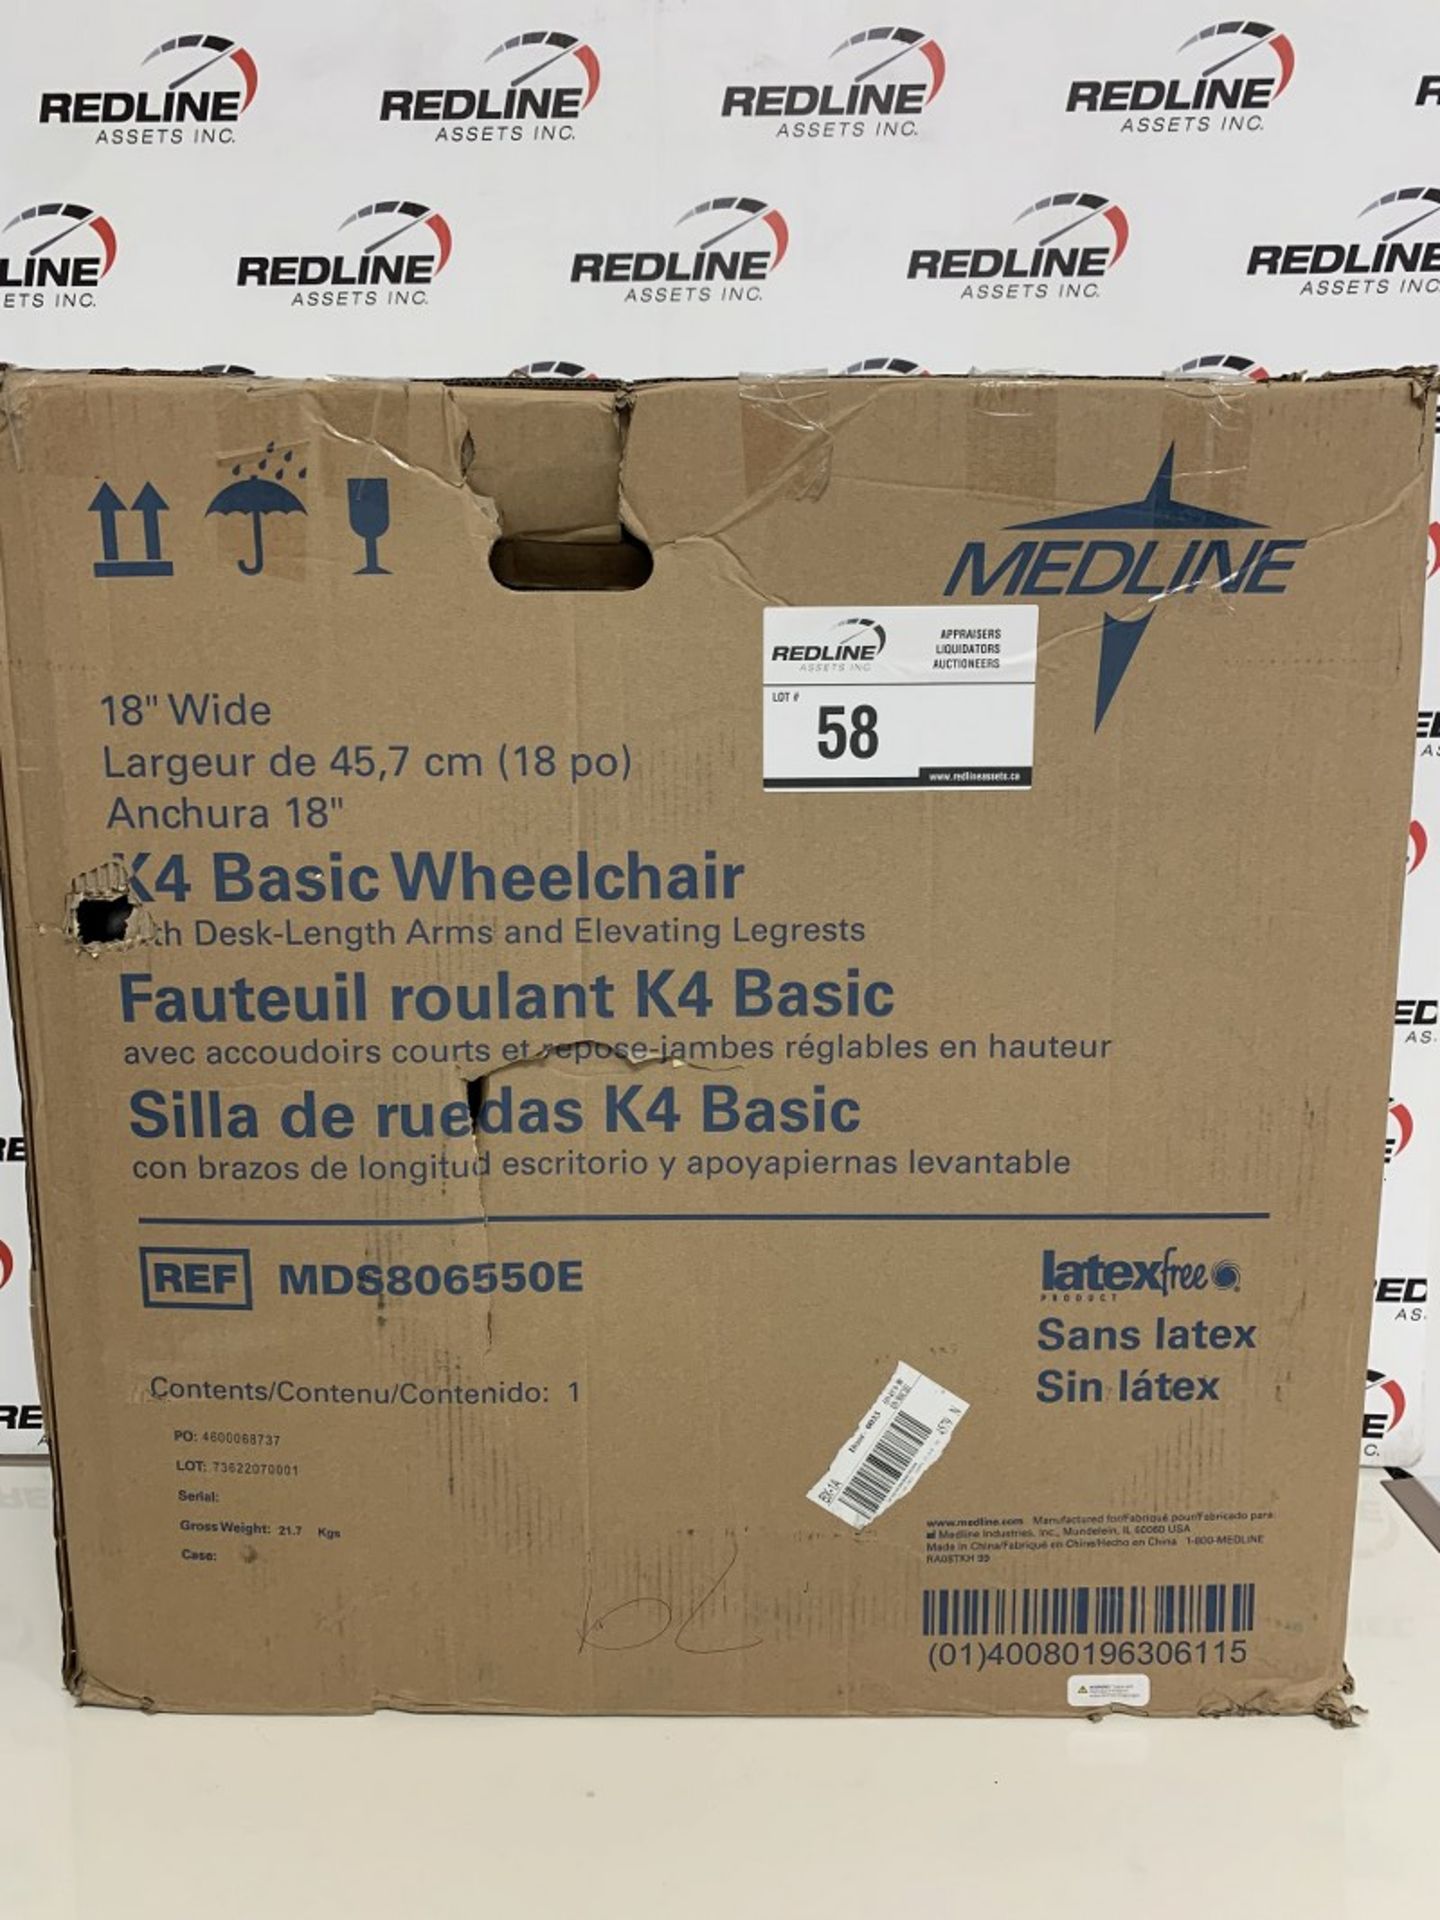 Mediline - 18" Wide K4 Basic Wheelchair